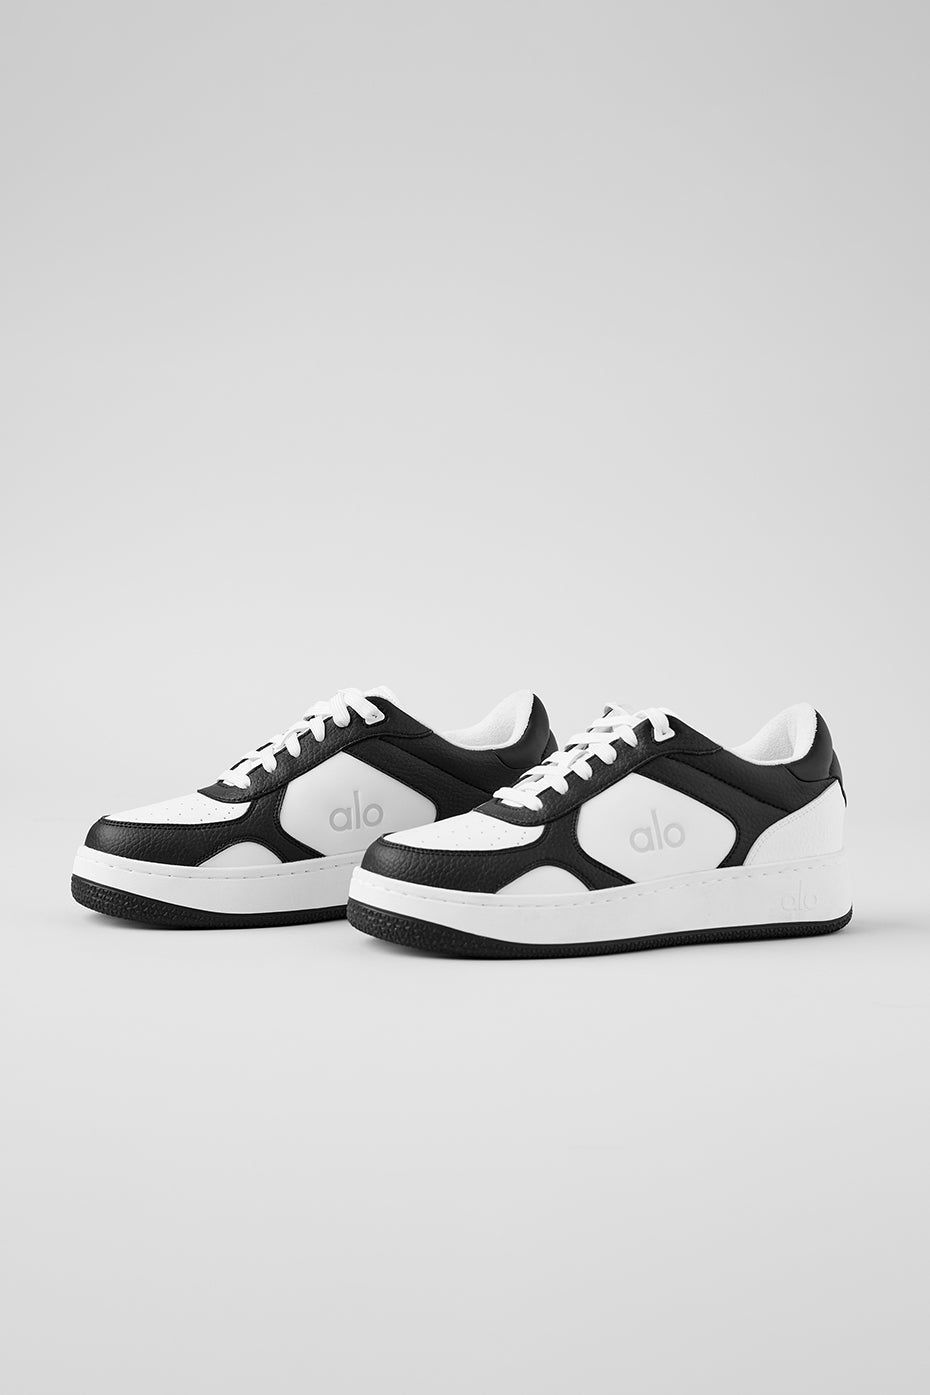 Alo Recovery Mode Sneaker - Black/White